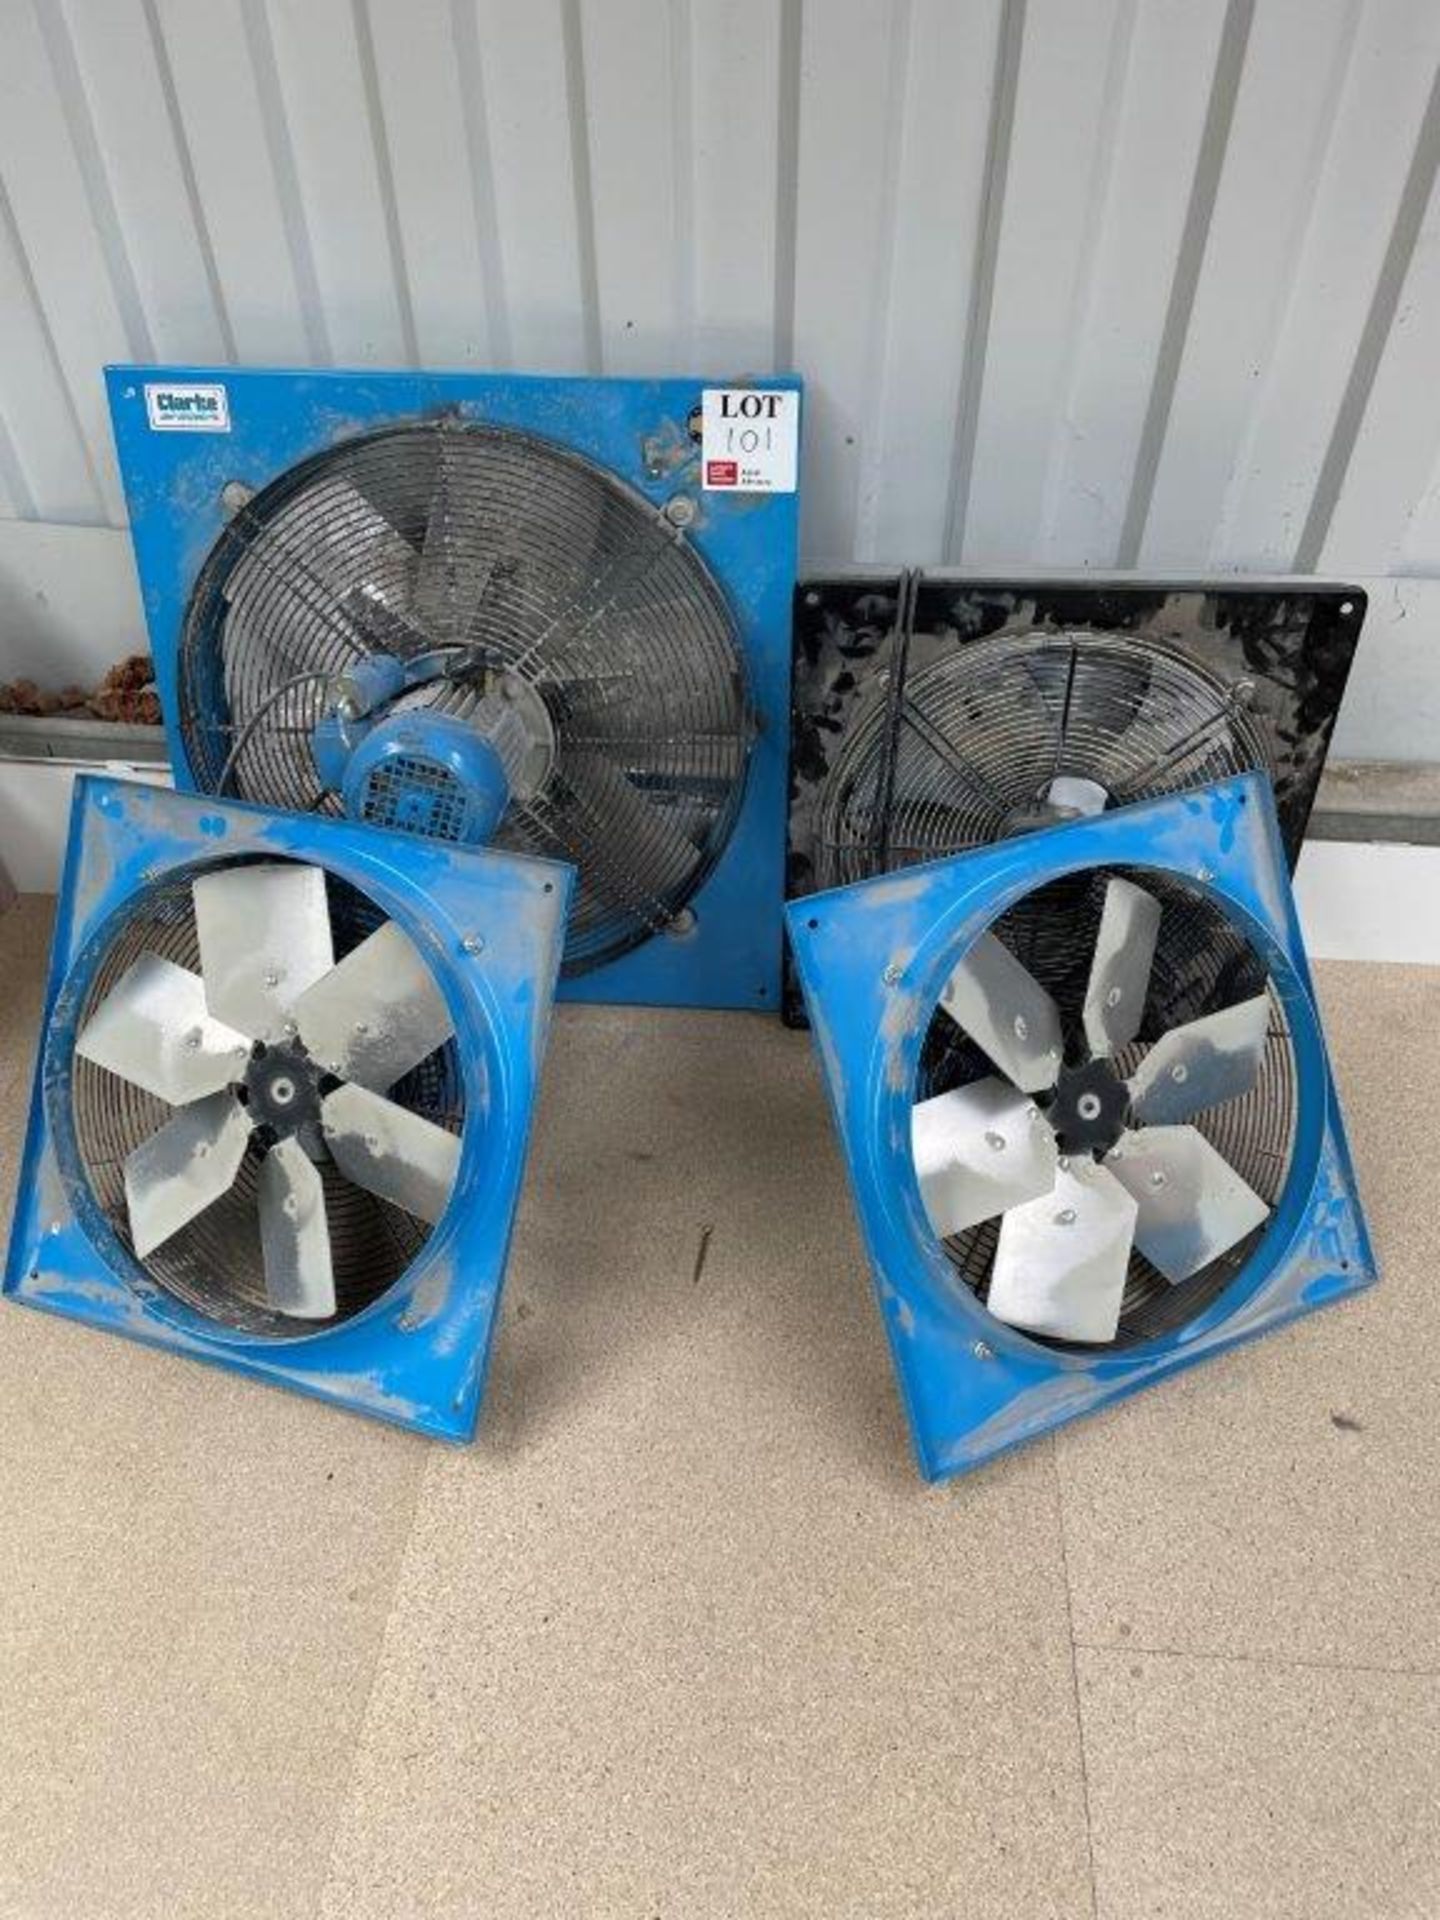 4 x Clarke extractor fans